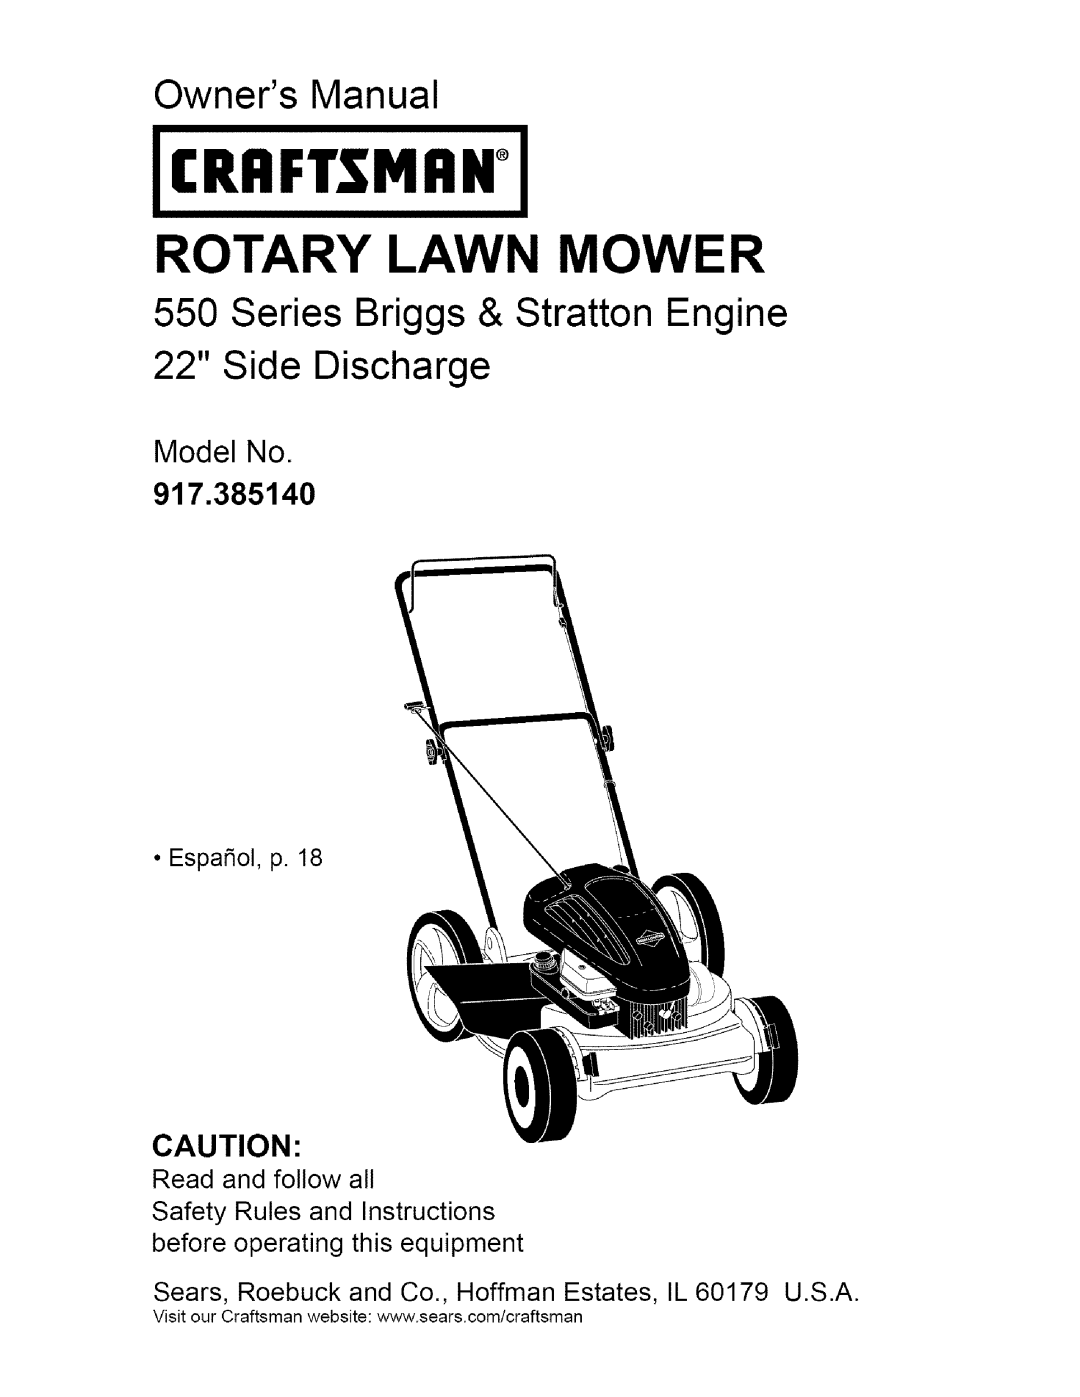 Craftsman 917.385140 owner manual Series Briggs & Stratton Engine, Model No, Crrftsmrn, Rotary Lawn Mower, Owners Manual 